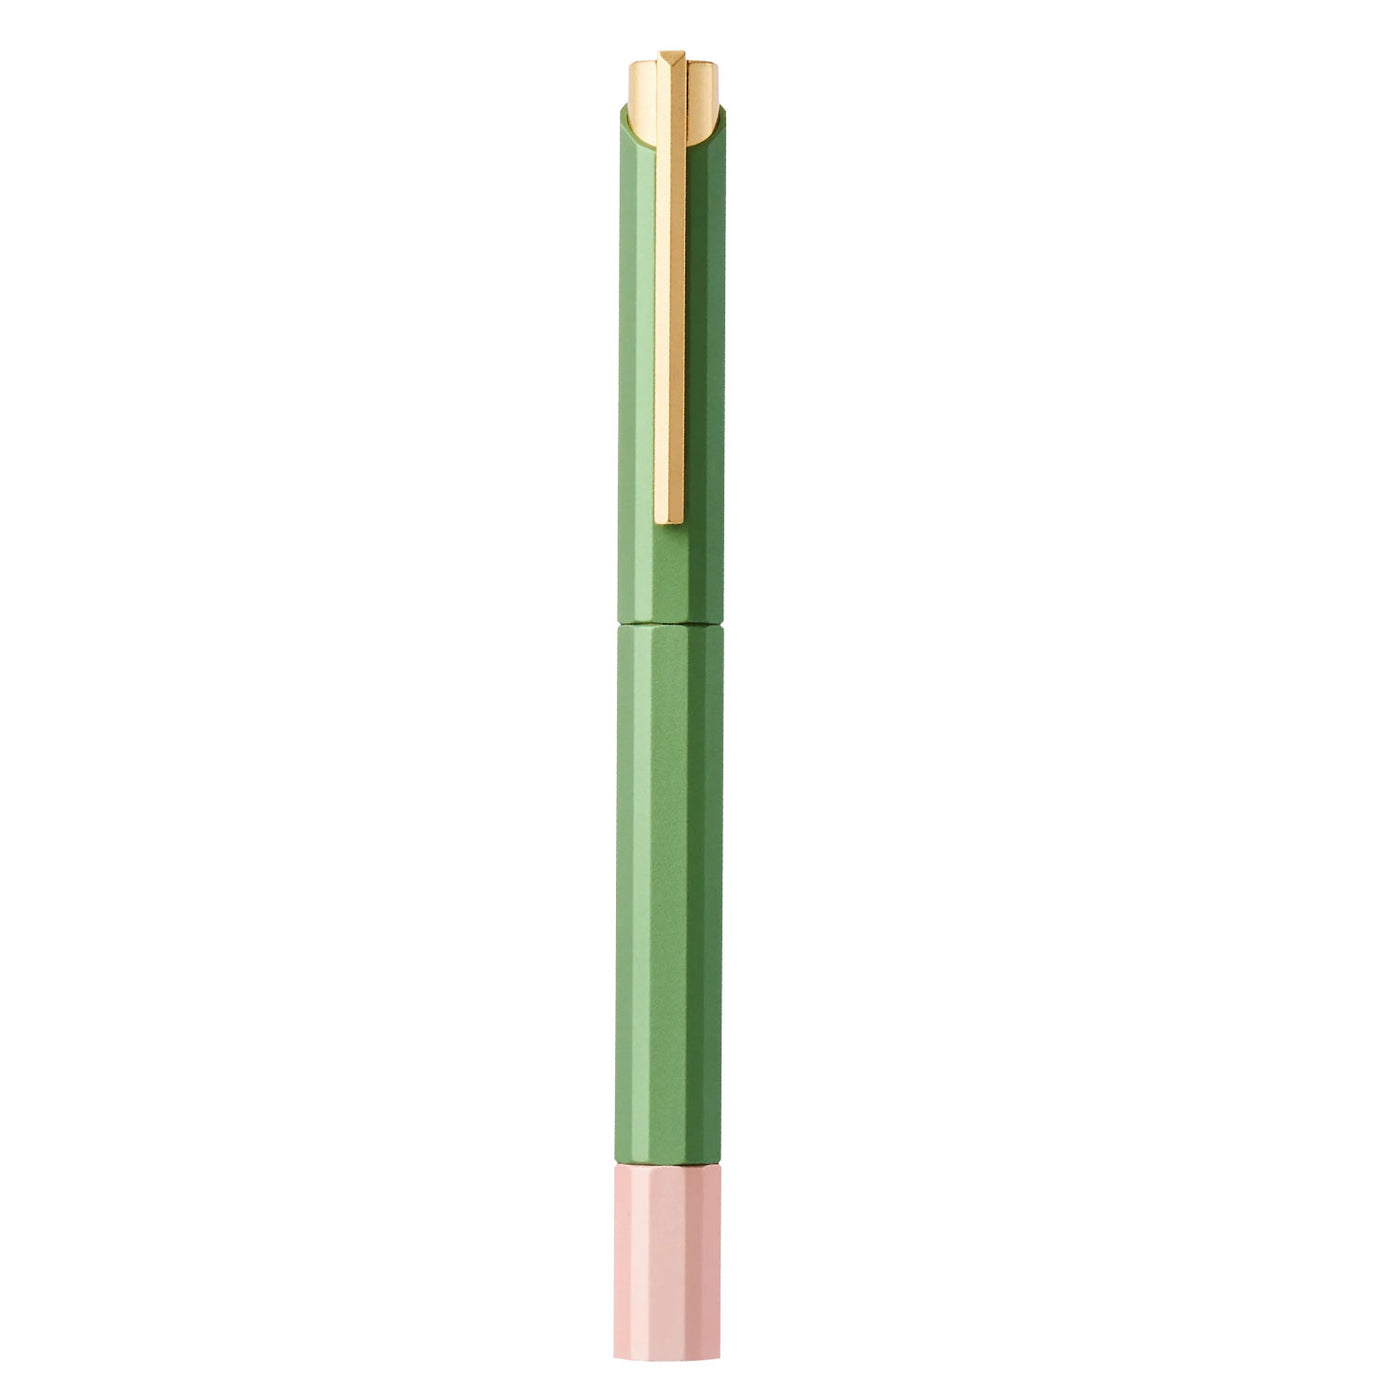 YSTUDIO Glamour Evolve Bihex Roller Ball Pen Absinthe (Green) 2